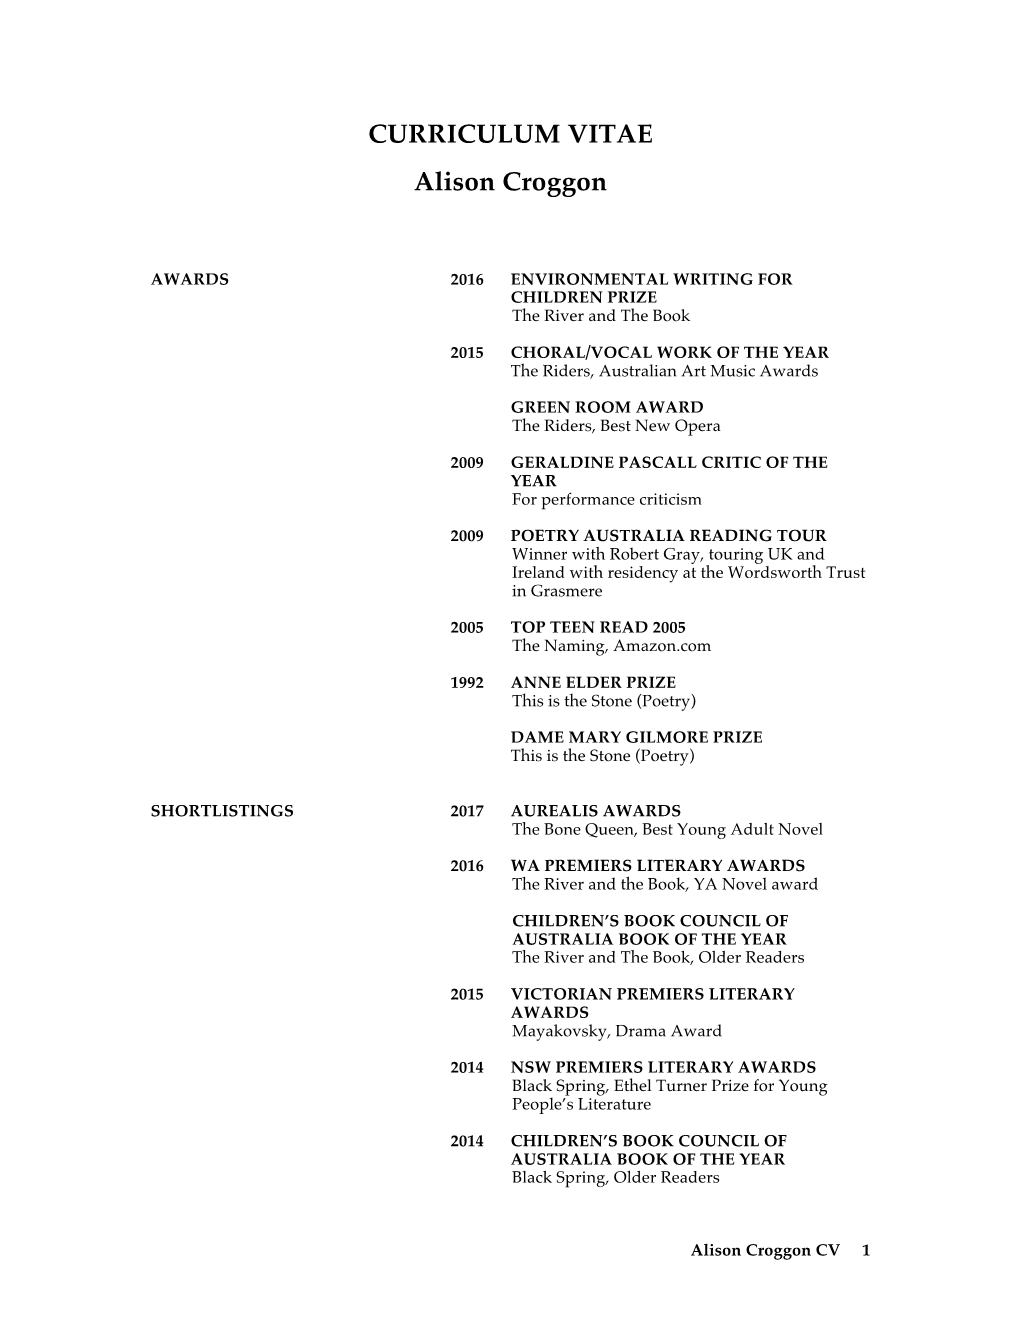 CURRICULUM VITAE Alison Croggon